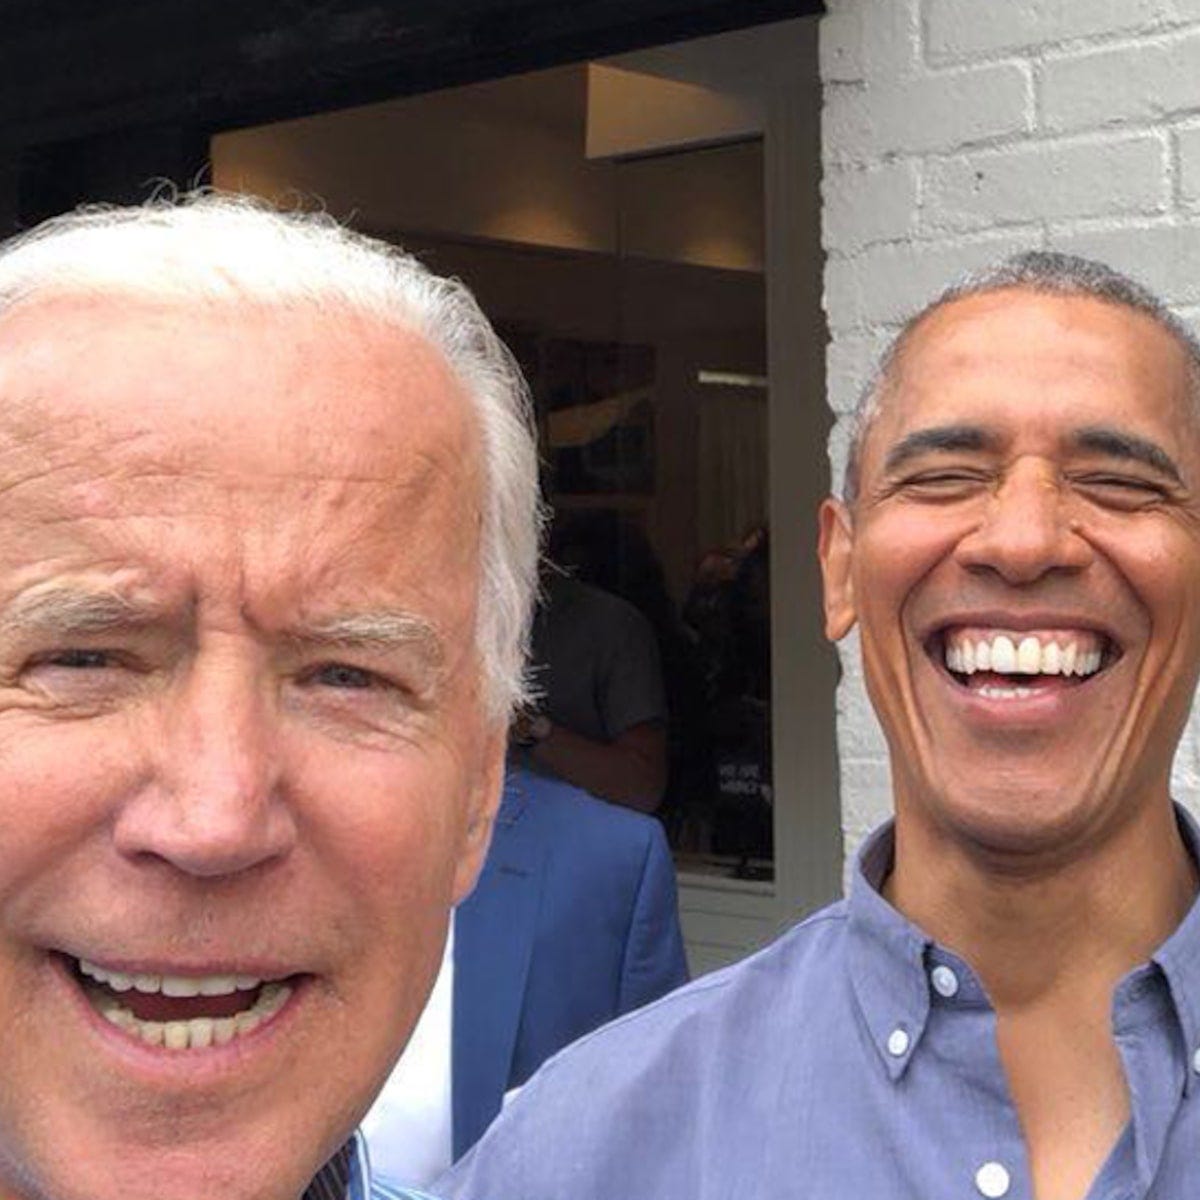 Uncle Joe and Barack laughing in the daddies selfie.